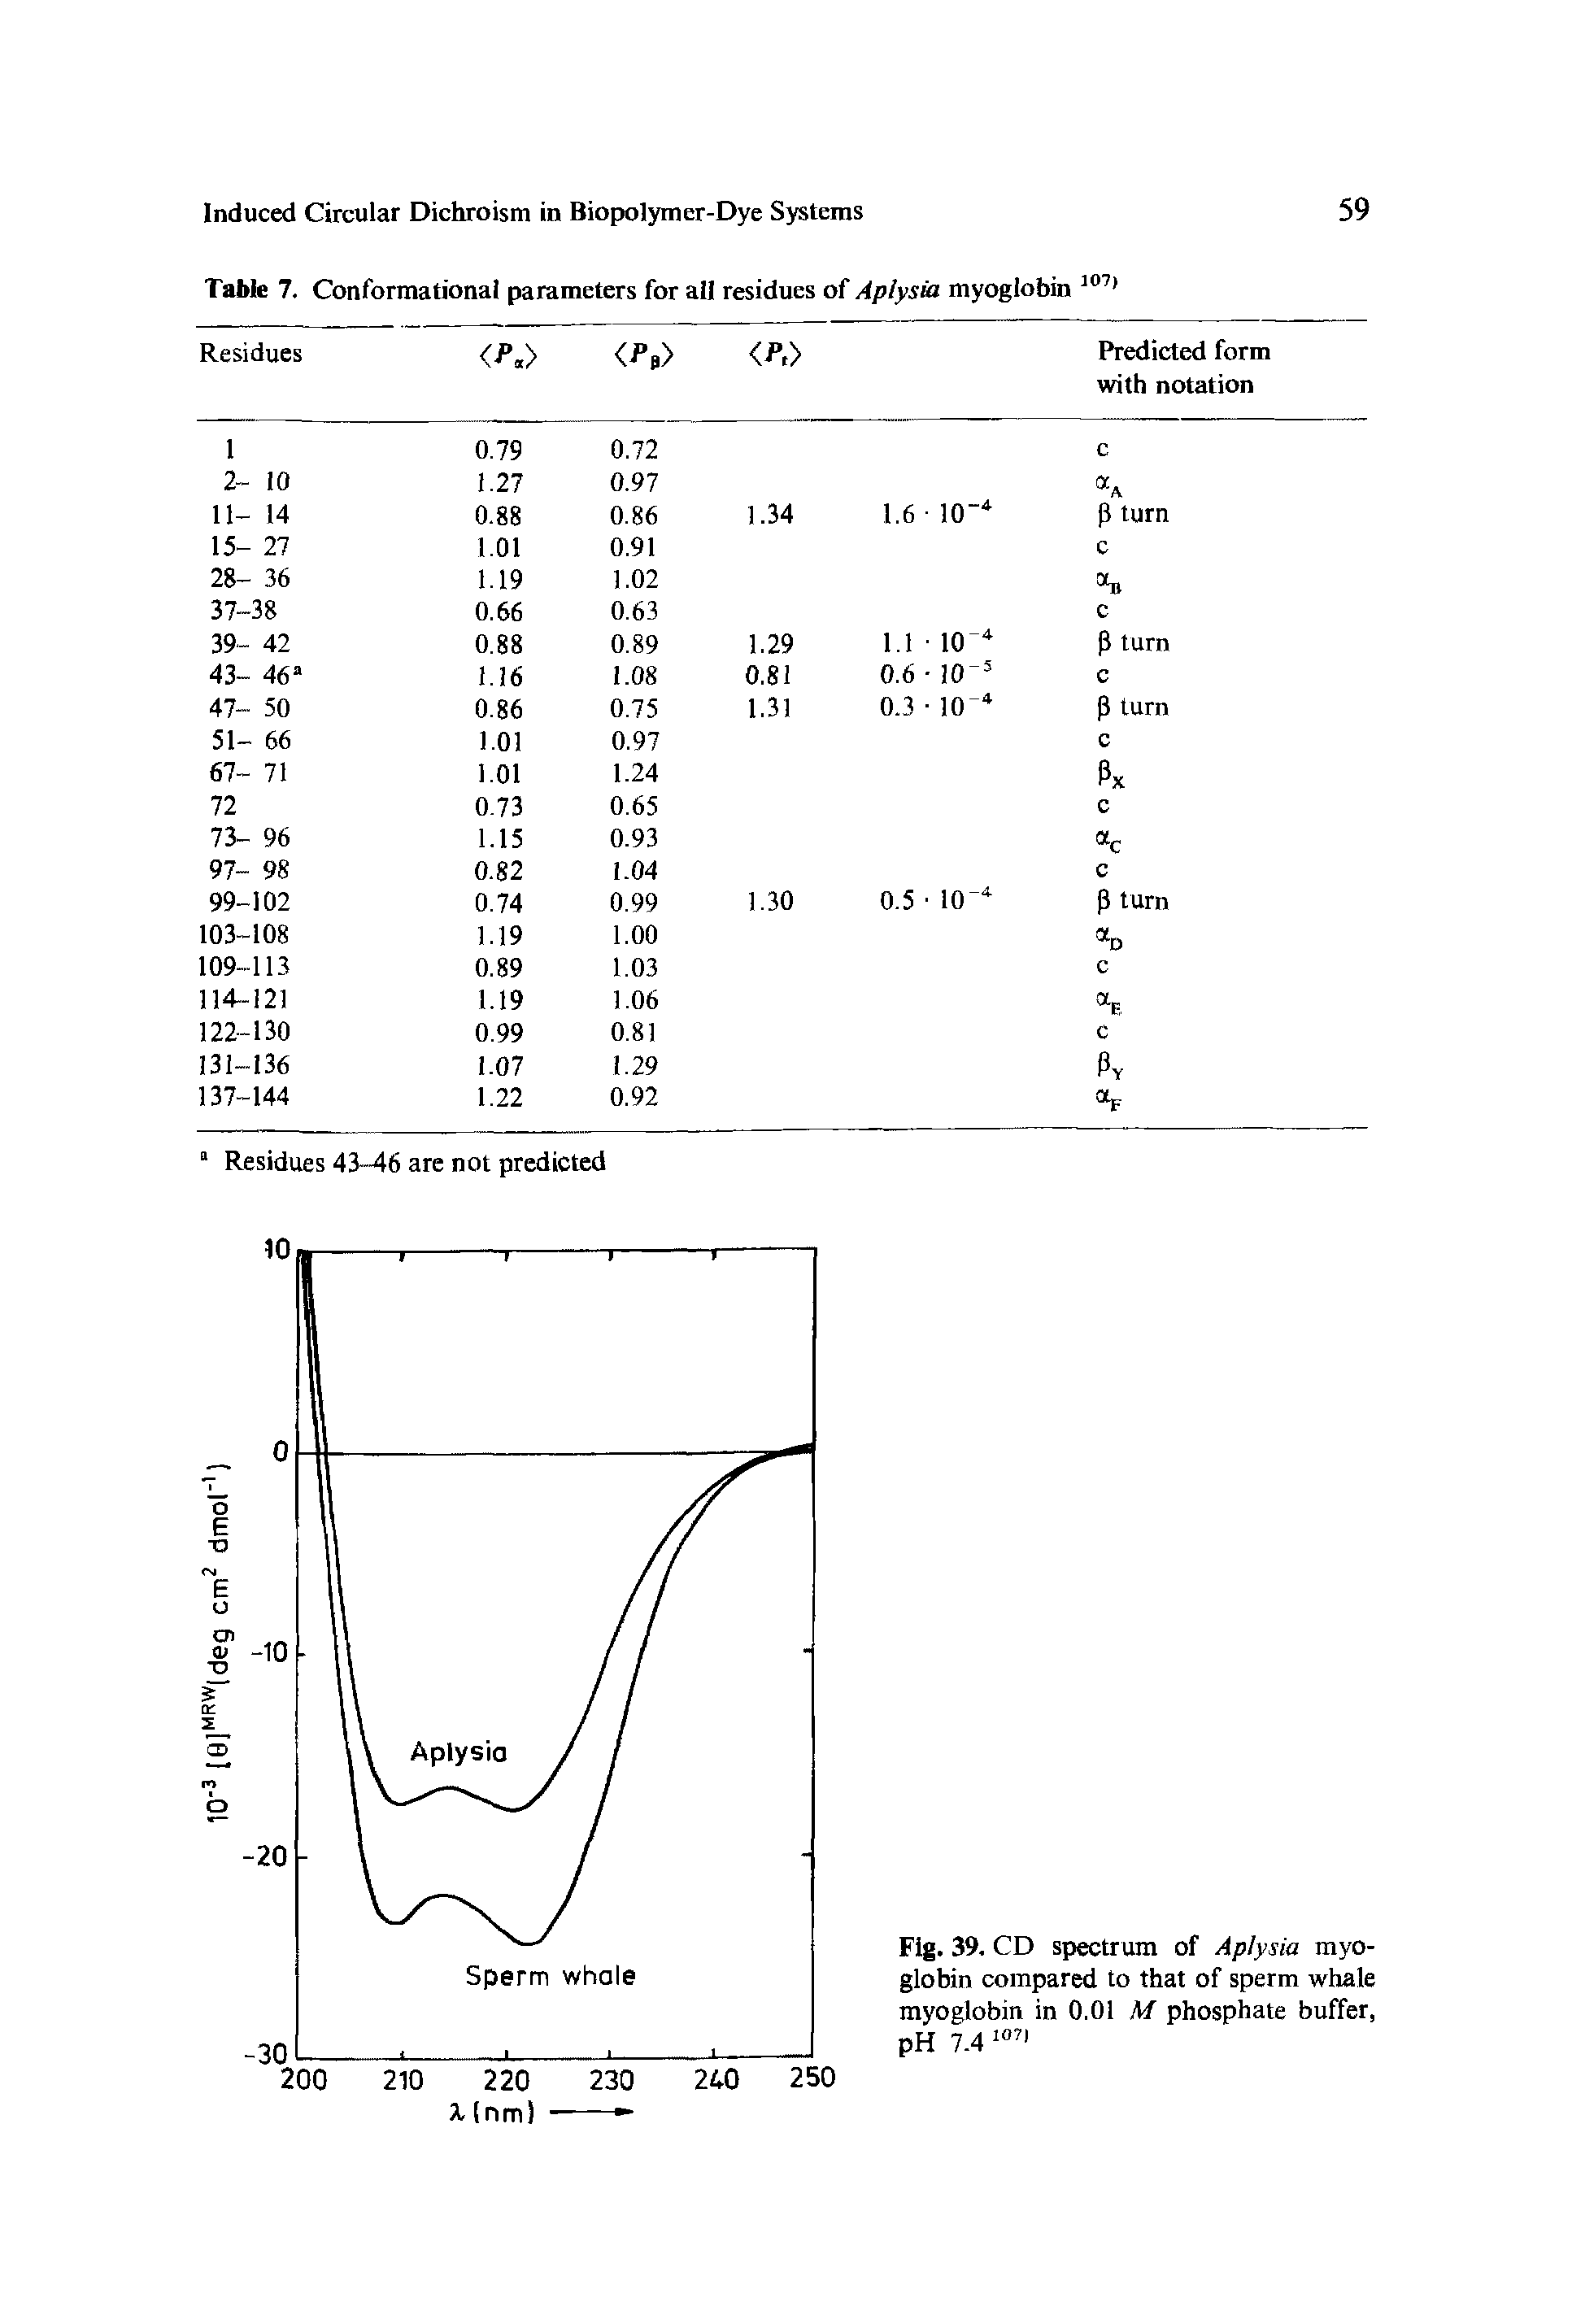 Fig. 39. CD spectrum of Aplysia myoglobin compared to that of sperm whale myoglobin in 0.01 M phosphate buffer, pH 7.4 1071...